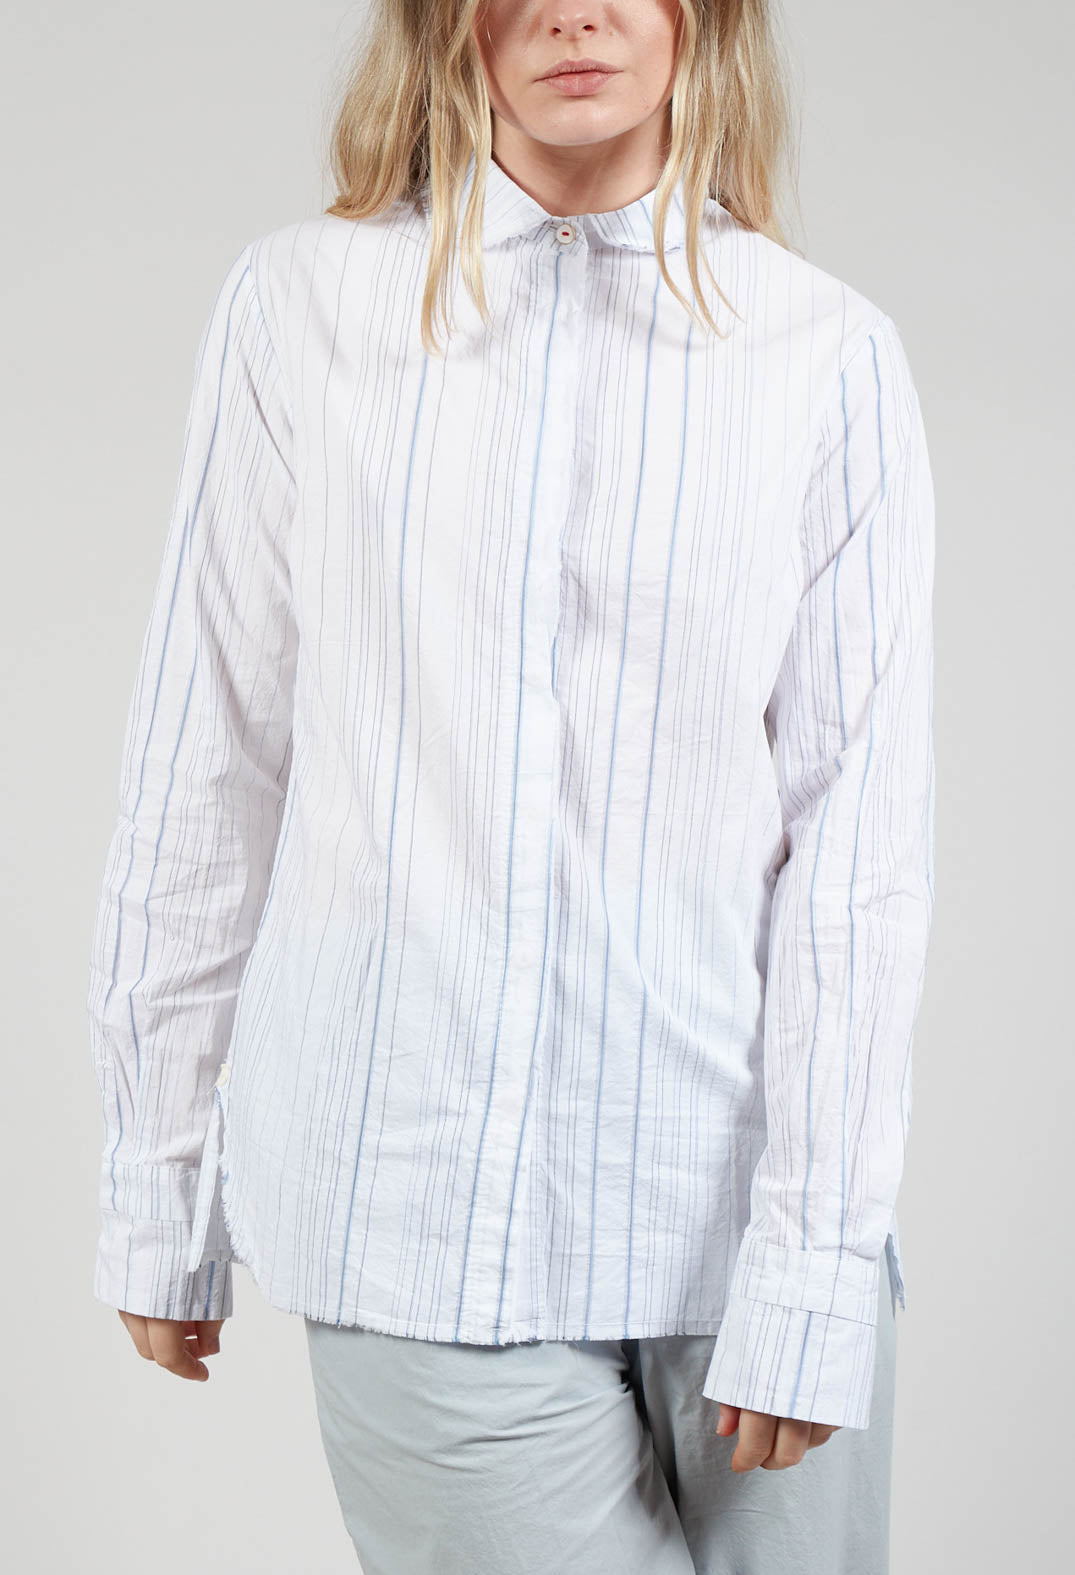 Calendula Shirt in White